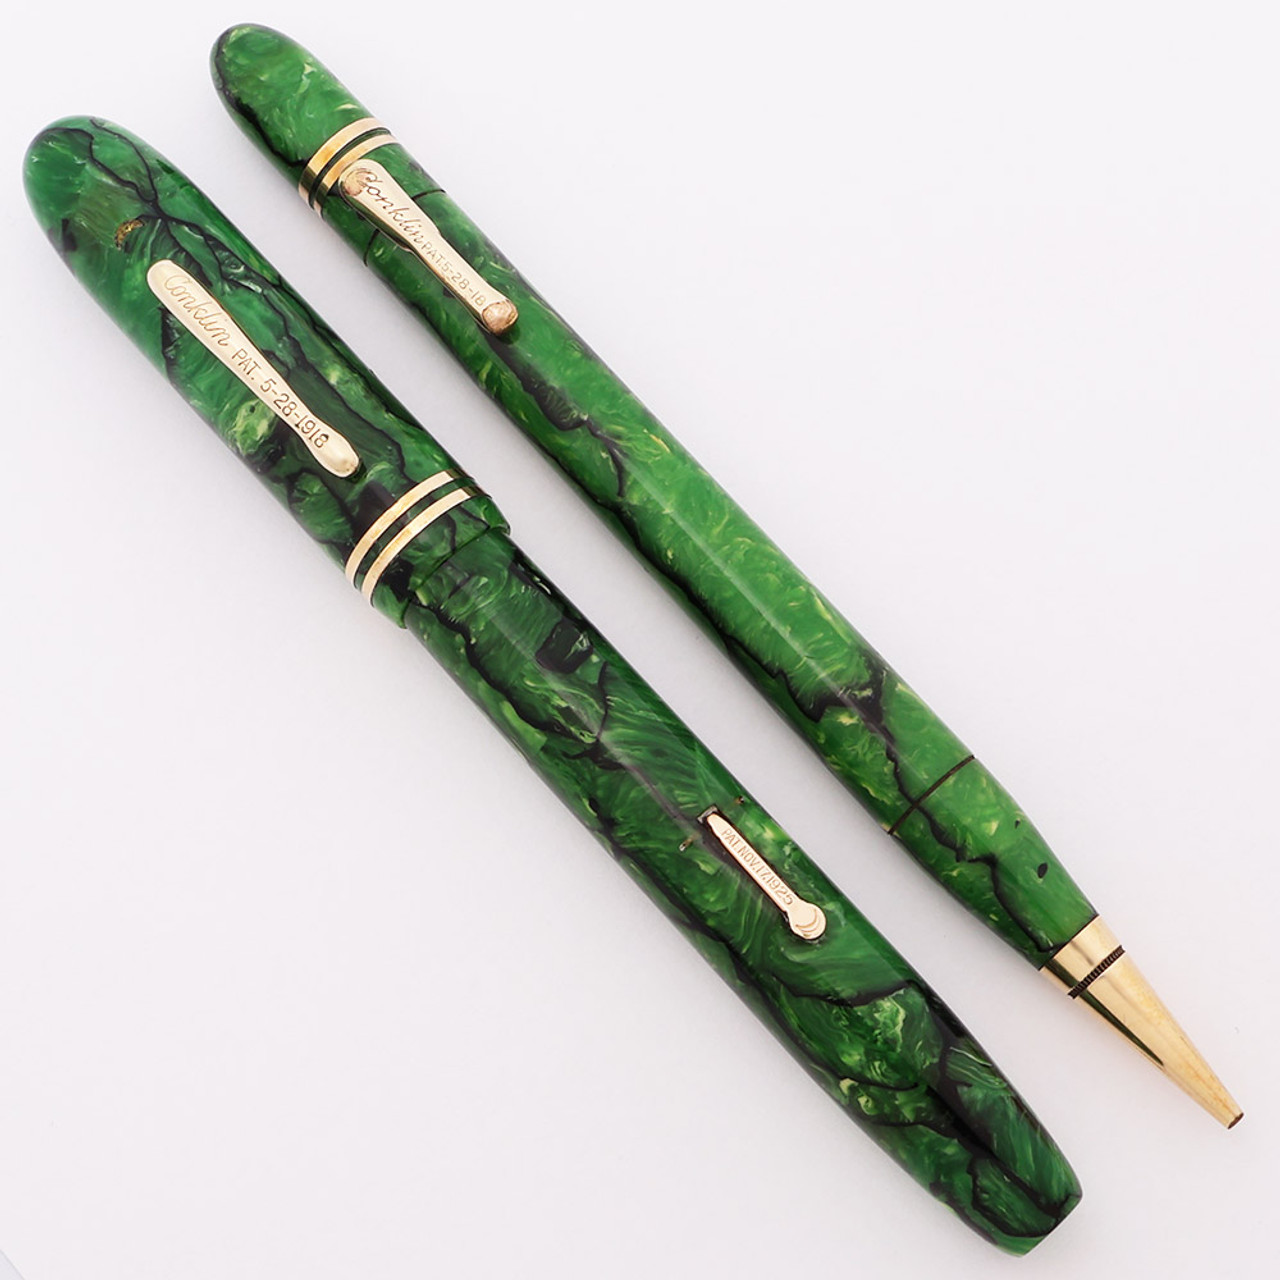 Conklin Endura Symetrik Oversize Fountain Pen Pencil Set (1930s) - Jade Green with Black Veins, Lever Filler, Medium Nib (Excellent, Restored)